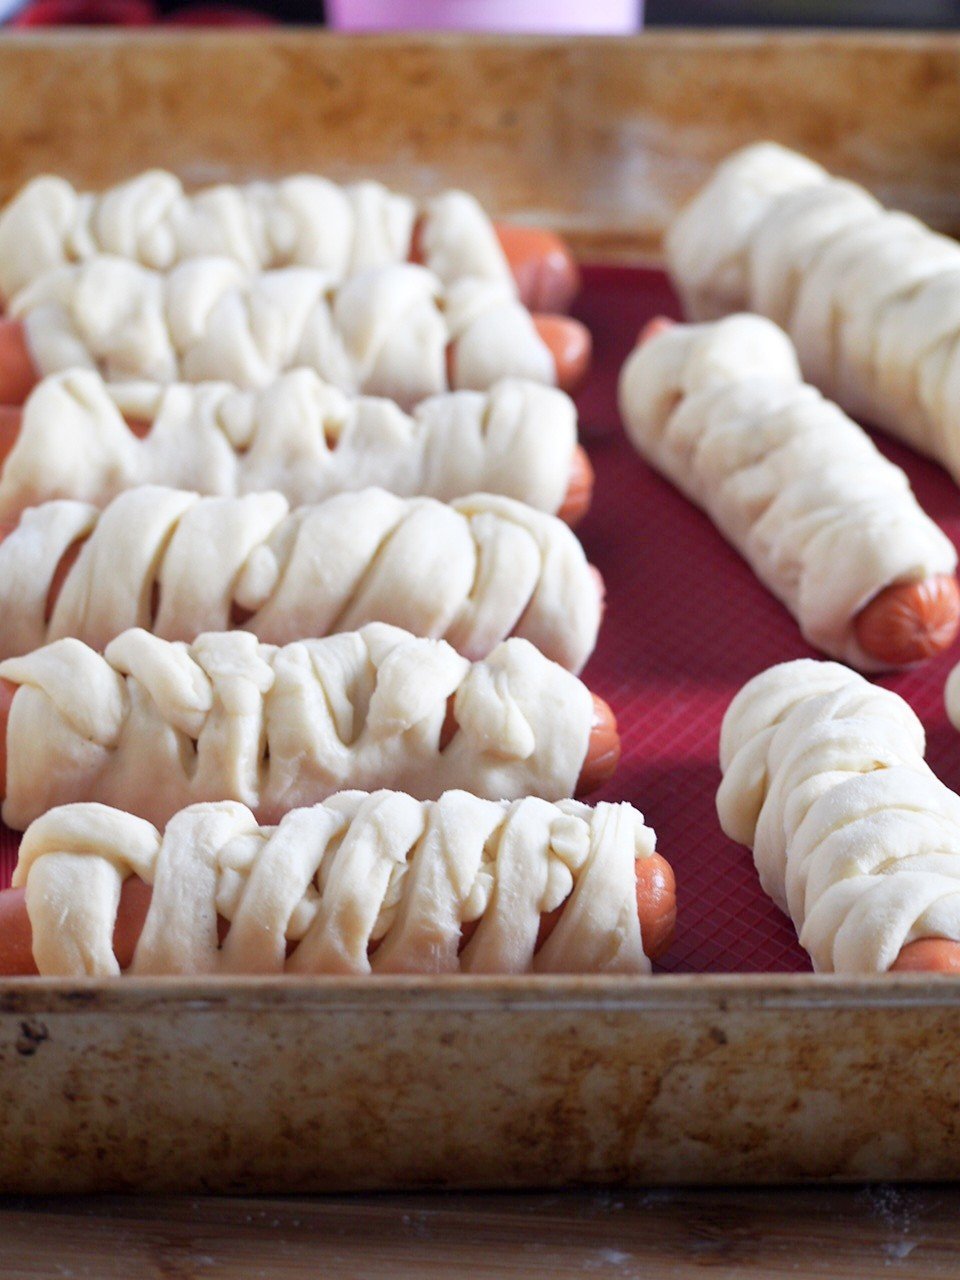 Assembled braided hotdog buns on the baking tray.